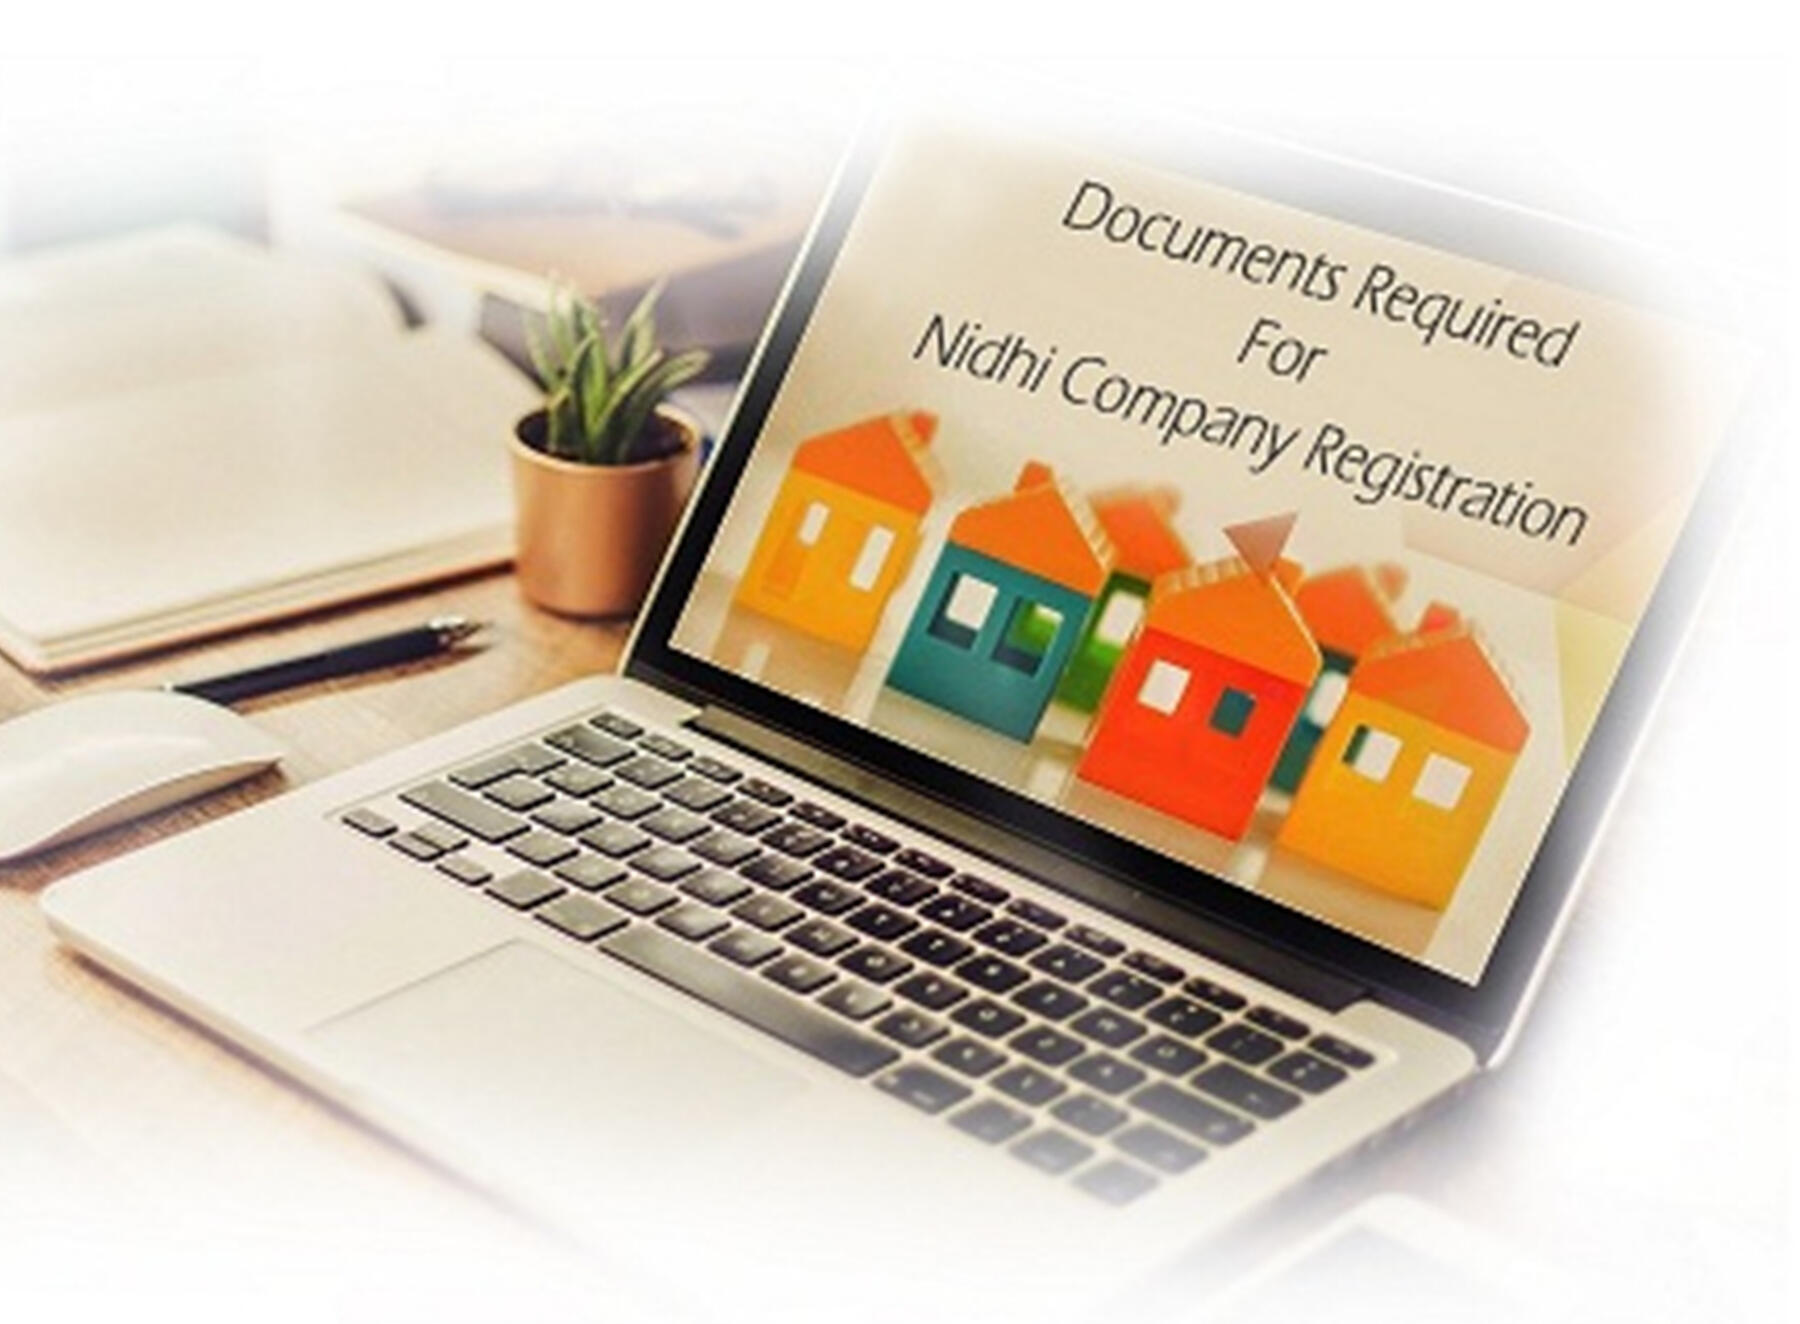 nidhi company registration documents